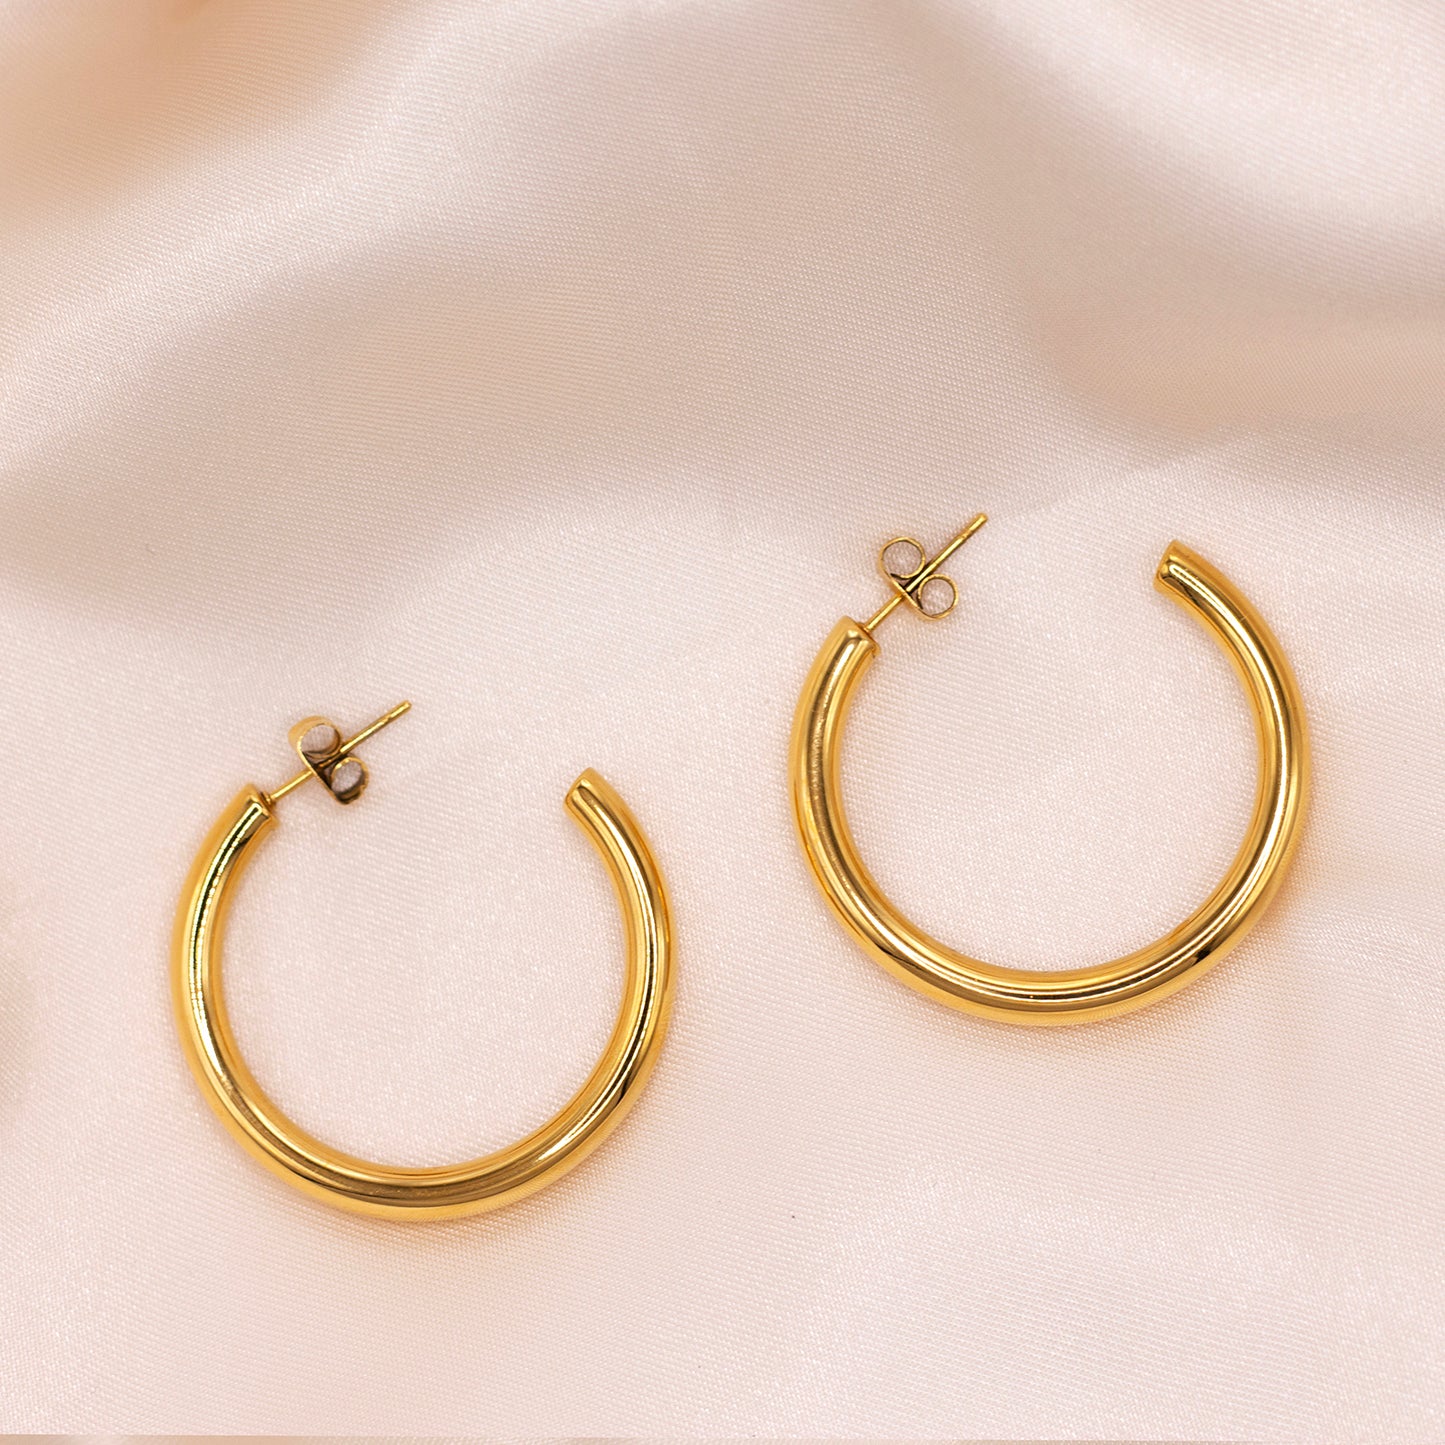 Gold Hoop Earrings - Hollow 35mm